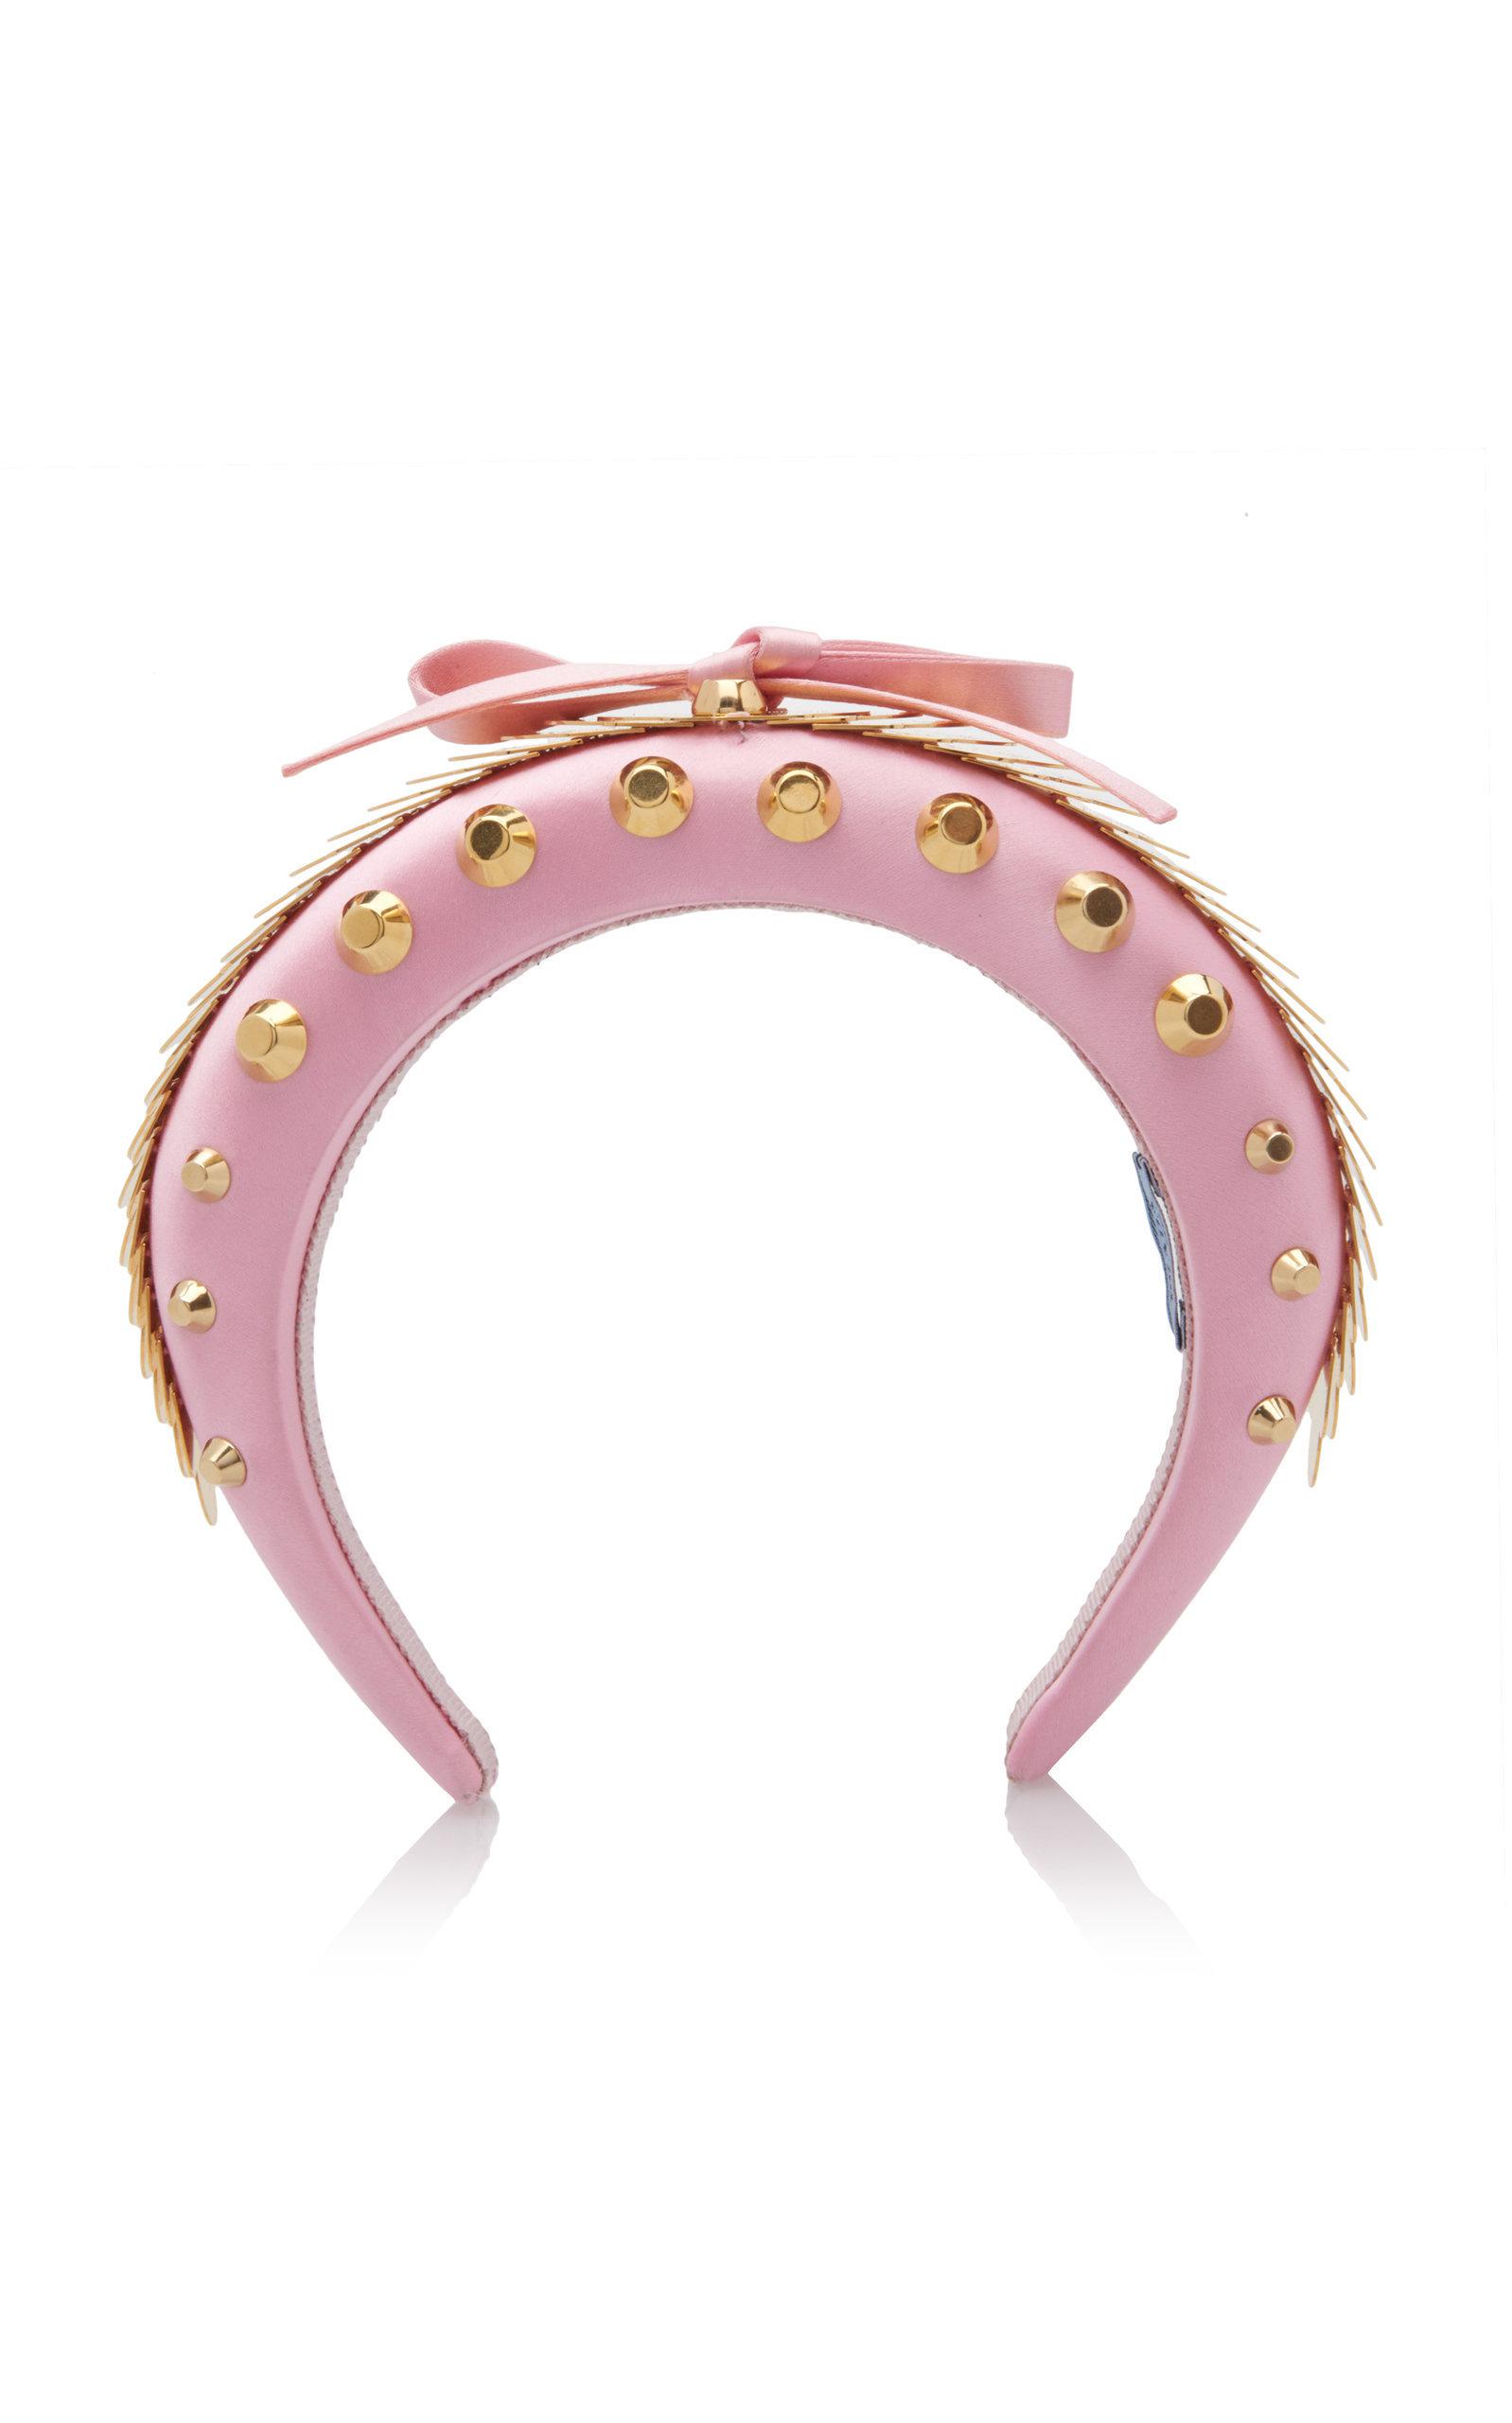 Prada Sequin Studded Satin Headband in Pink - Lyst